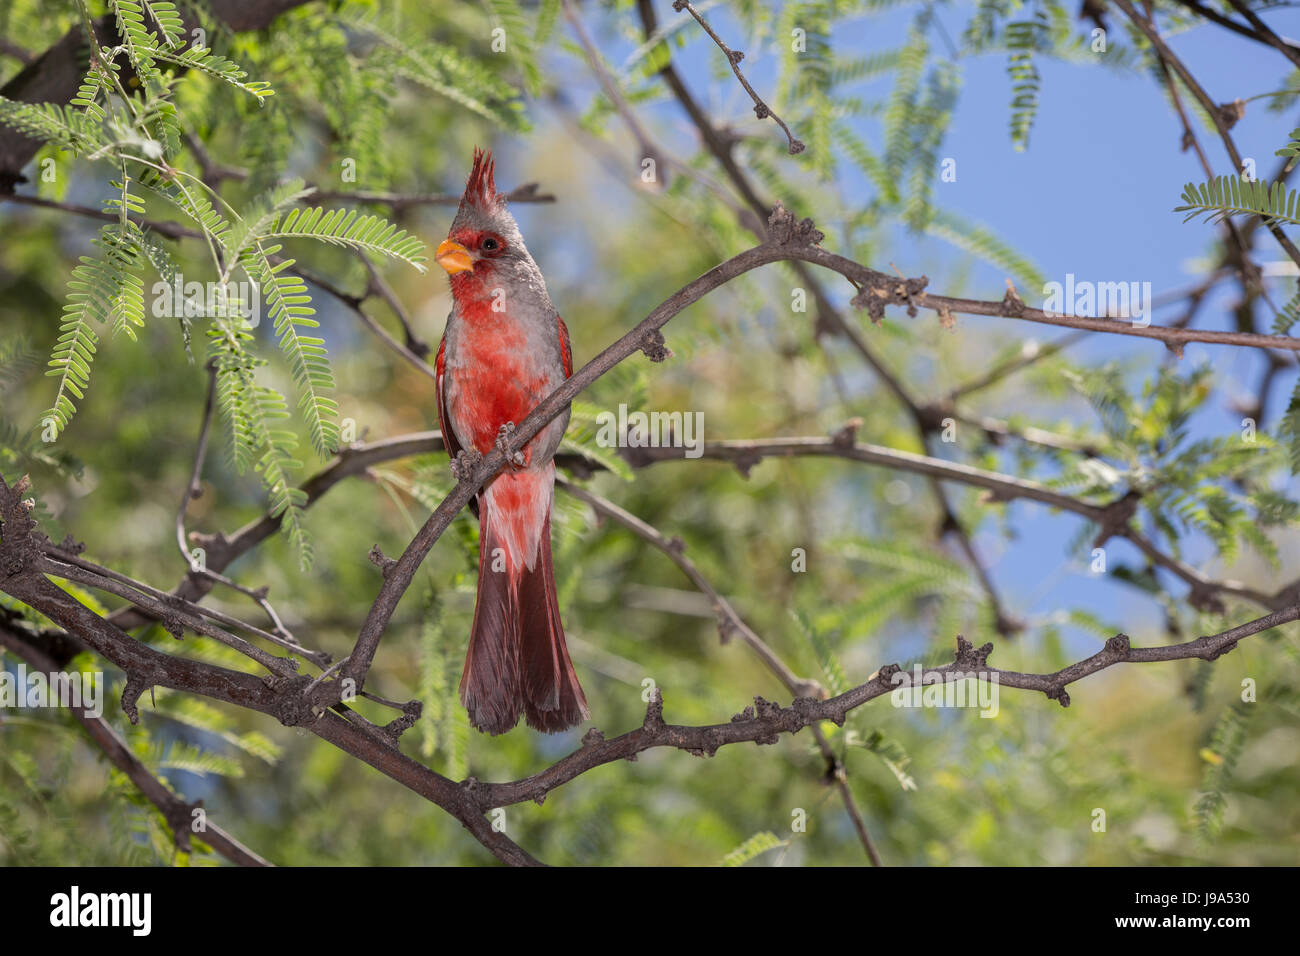 Pyrrhuloxia or desert cardinal (Cardinalis sinuatus) perched on tree branch, Stock Photo